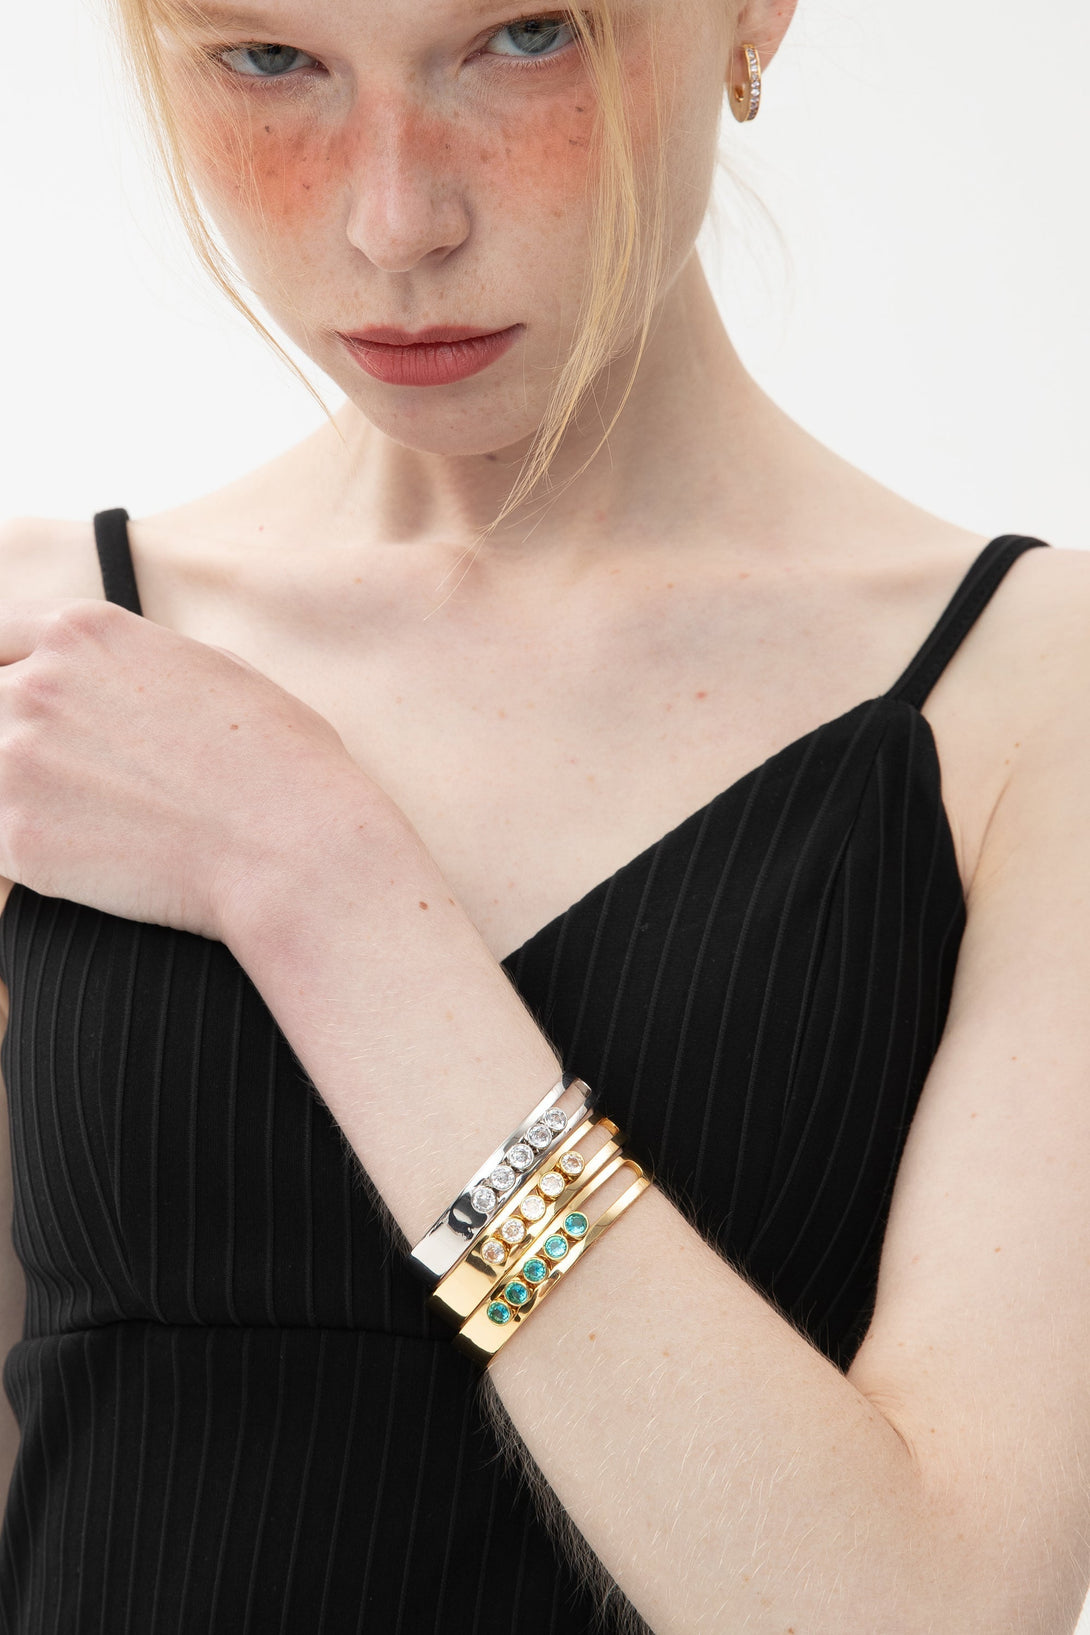 Audrey Silver Twinkling Clear Zirconia Half Crescent Bangle Bracelet - Classicharms